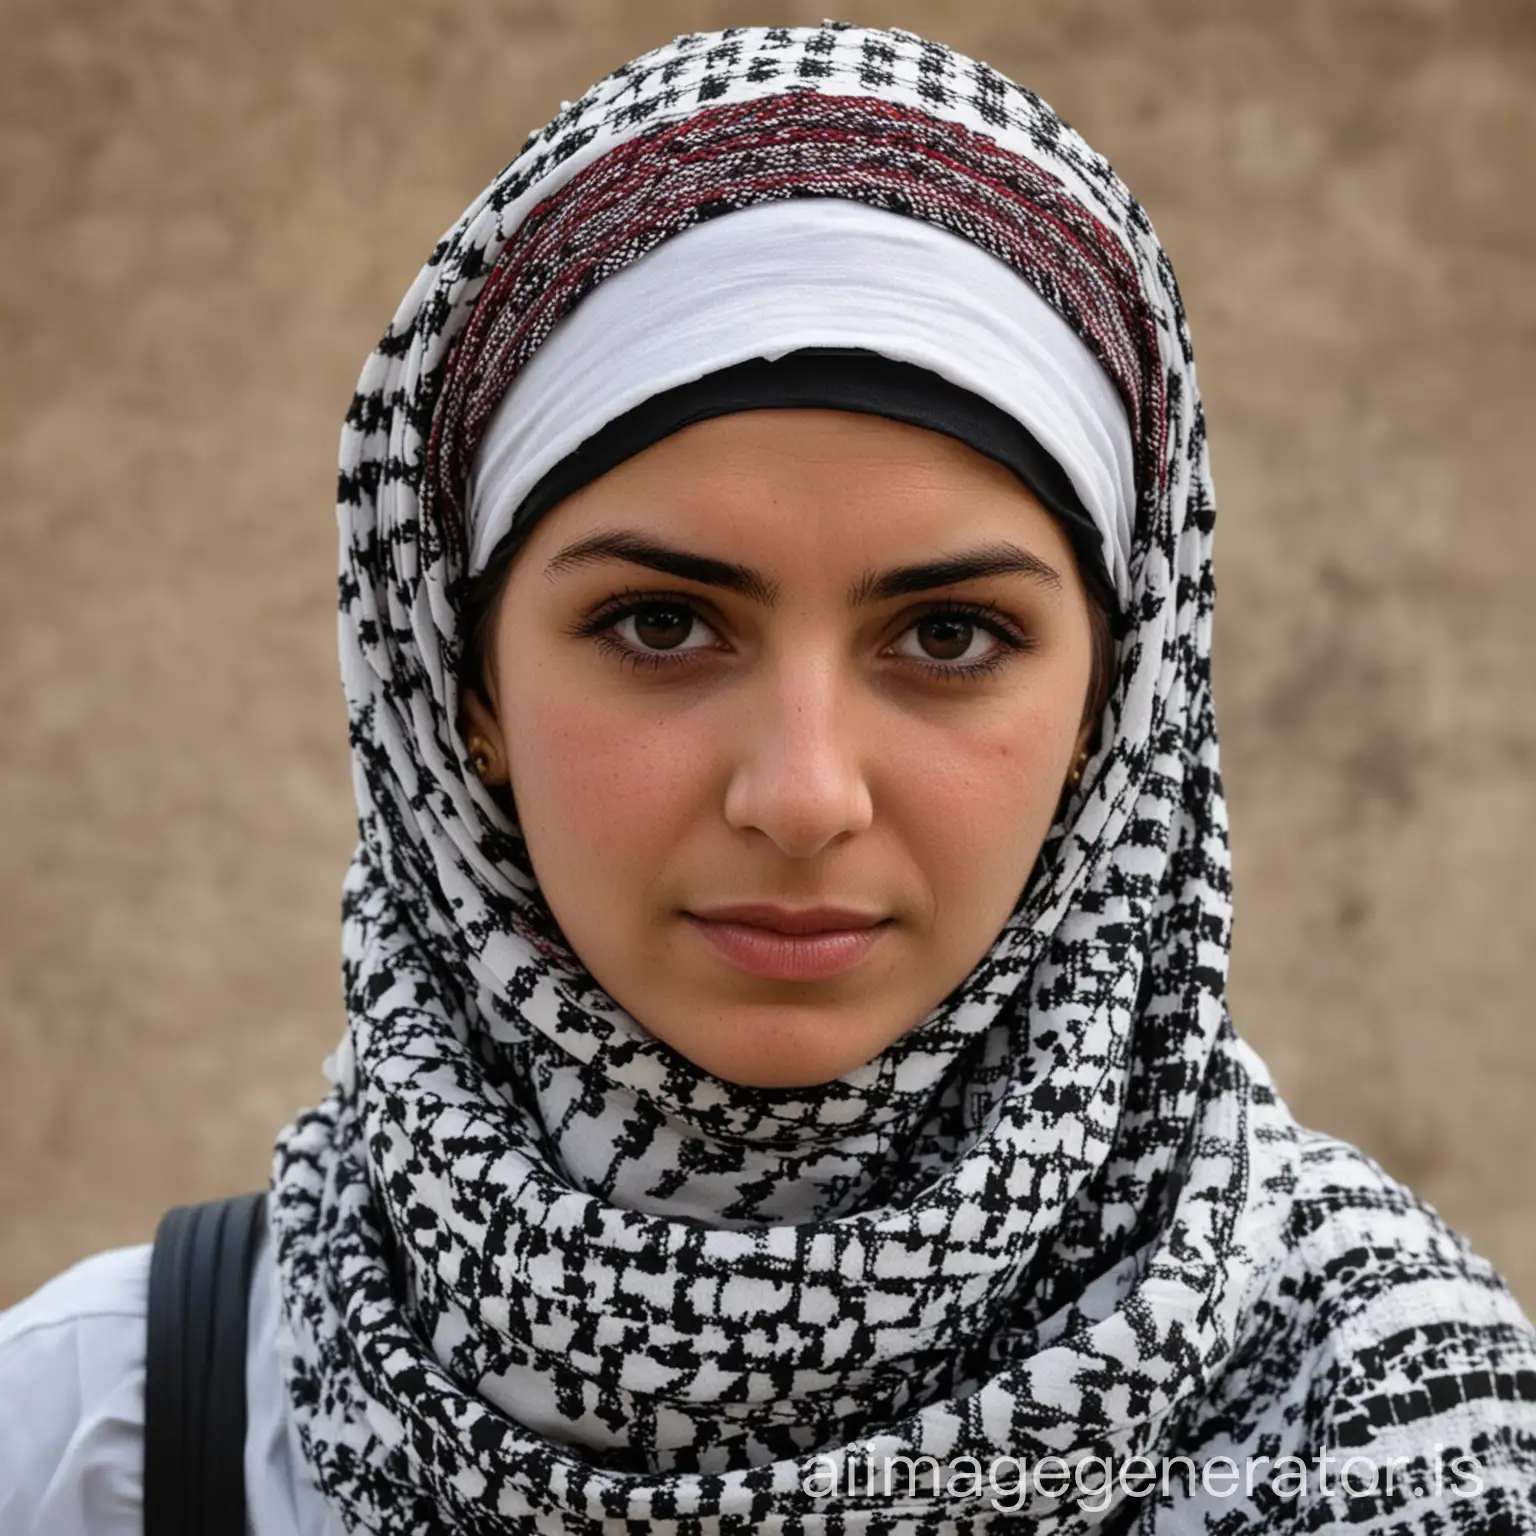 Woman-in-Traditional-Palestinian-Keffiyeh-Headscarf